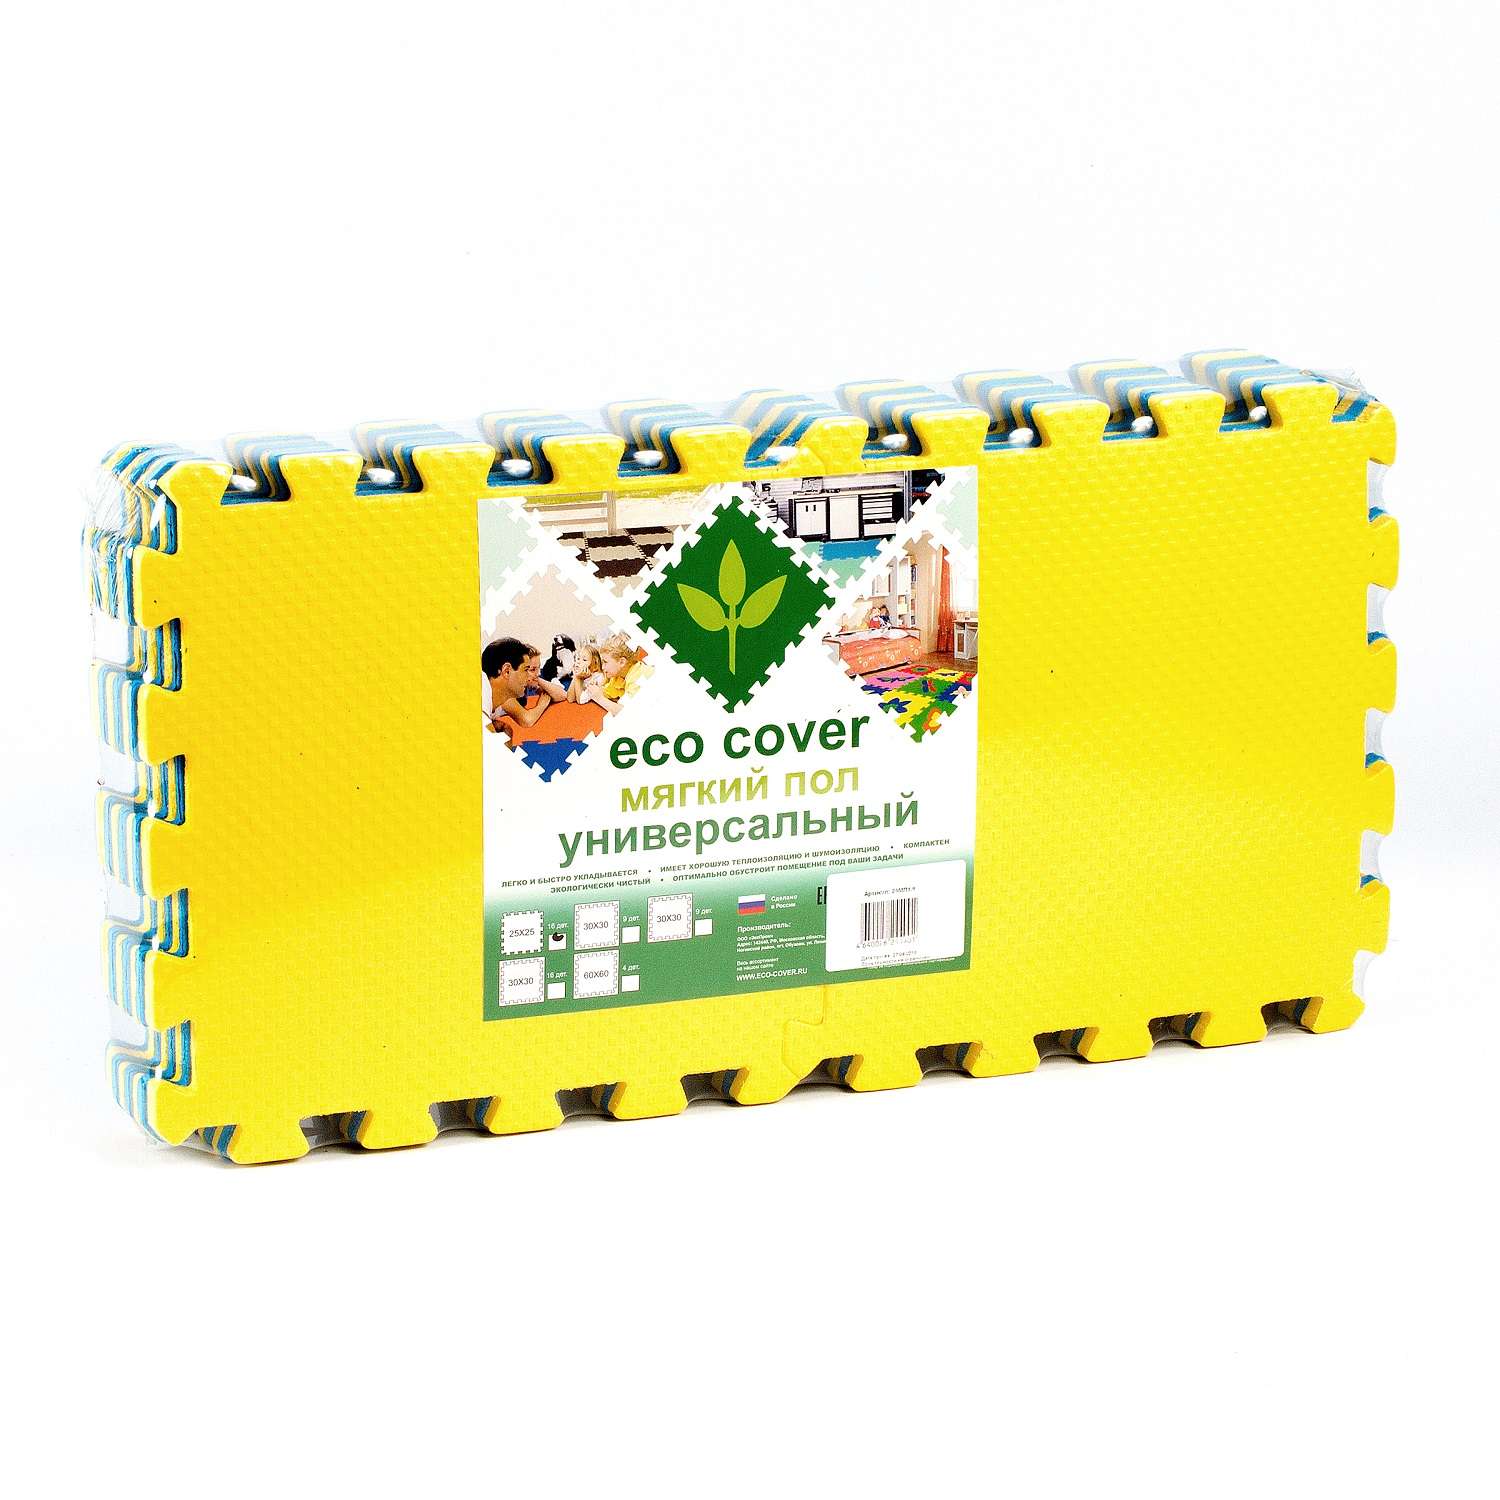 Развивающий детский коврик Eco cover мягкий пол для ползания желто-синий 25х25 - фото 3